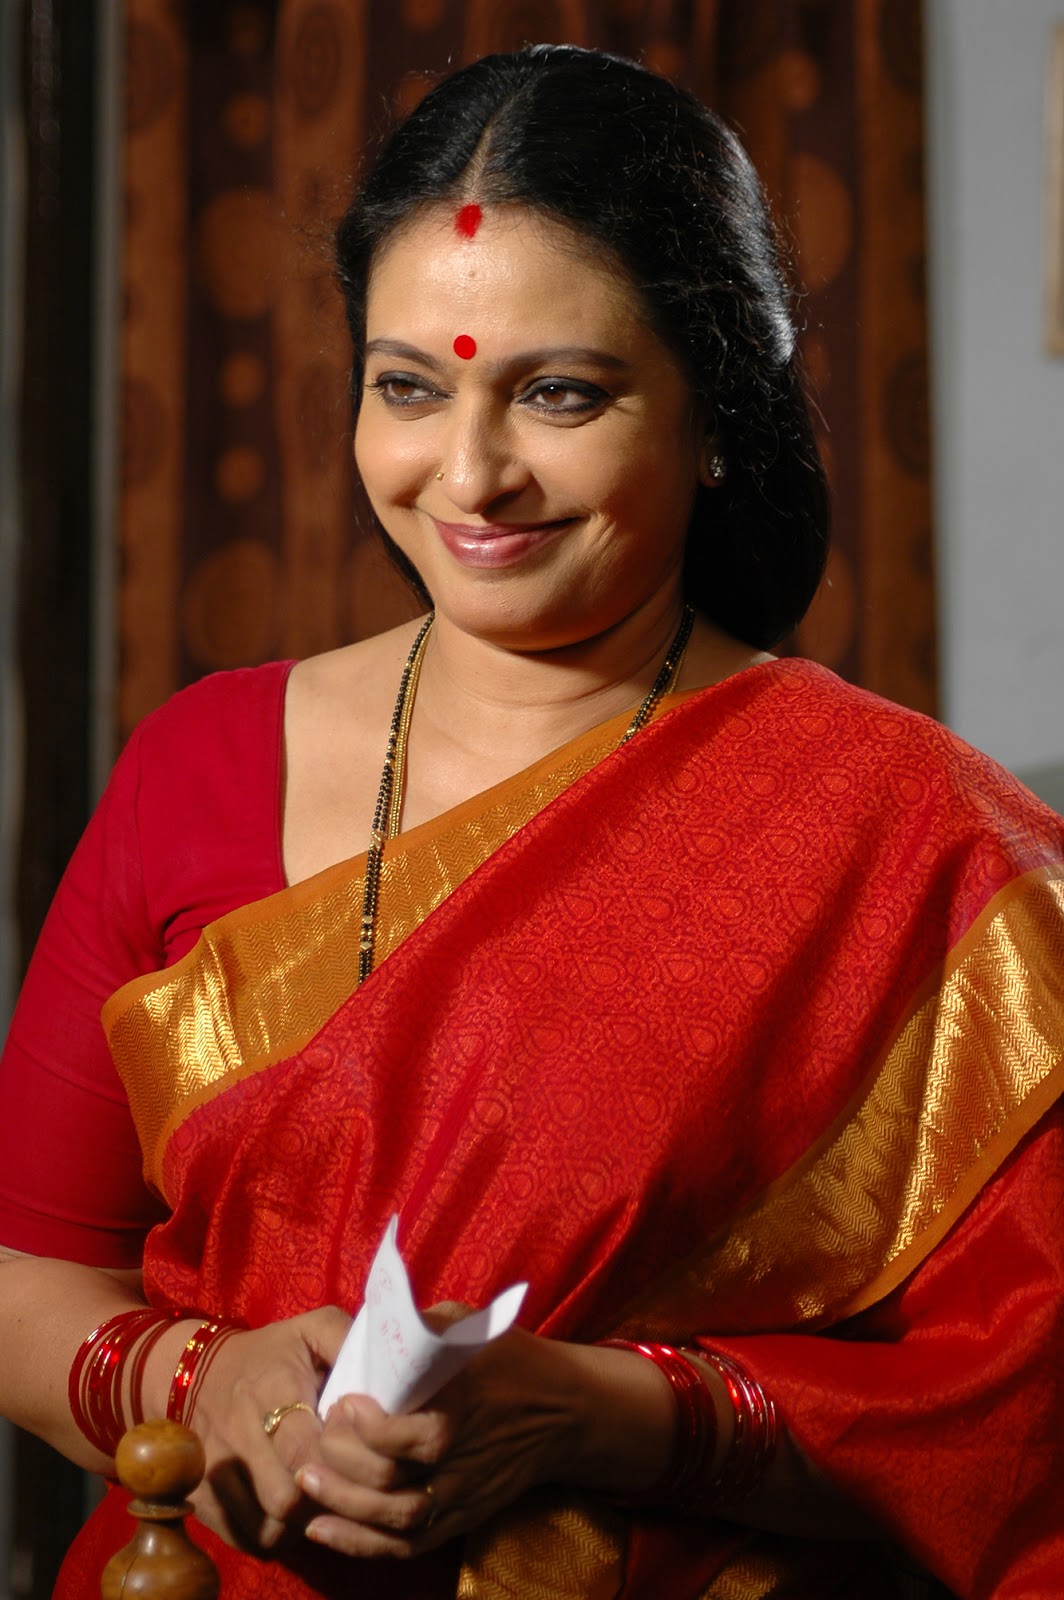 fondos de pantalla de amma,sari,evento,tradicion,ceremonia,sonrisa